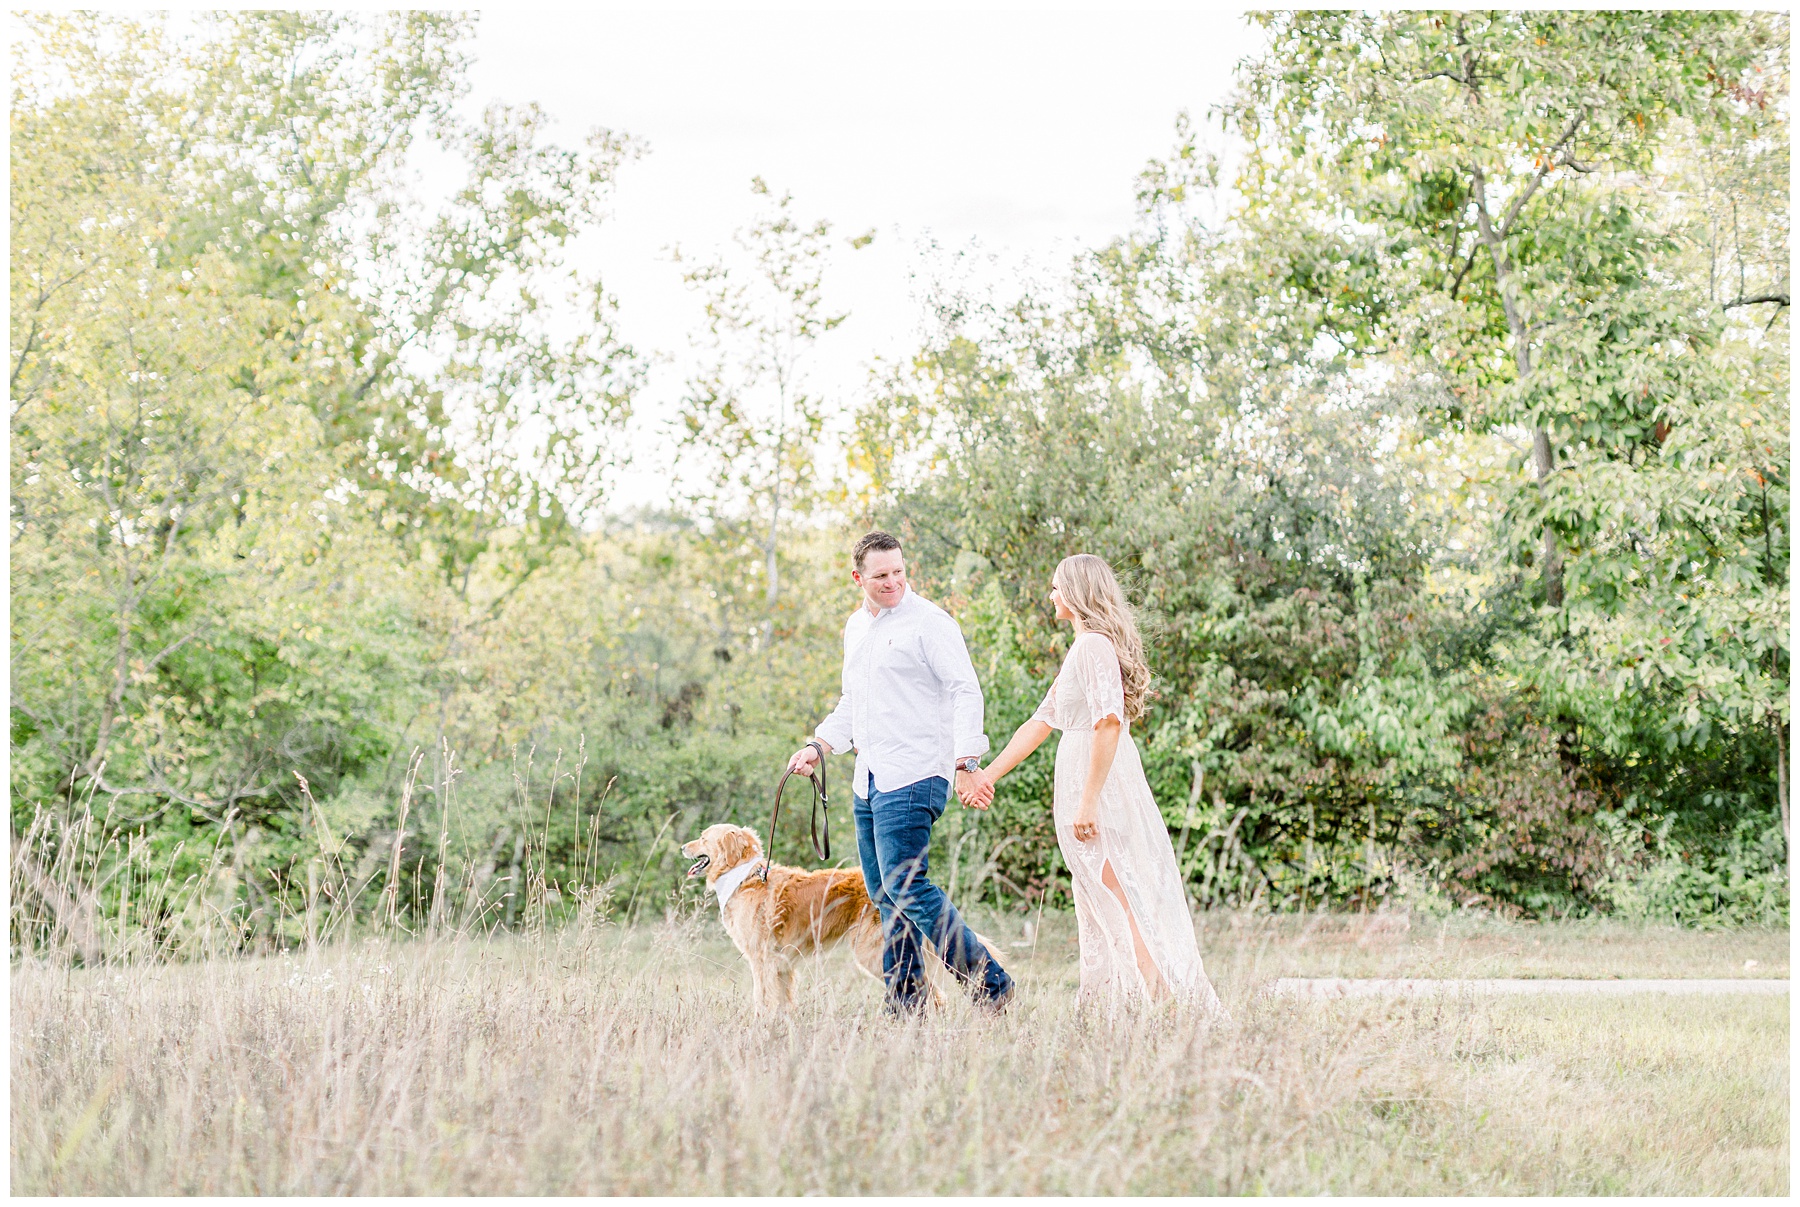 Hoover Reservoir Park Engagement Session by Amanda Eloise Photography. North Carolina Wedding Photographer